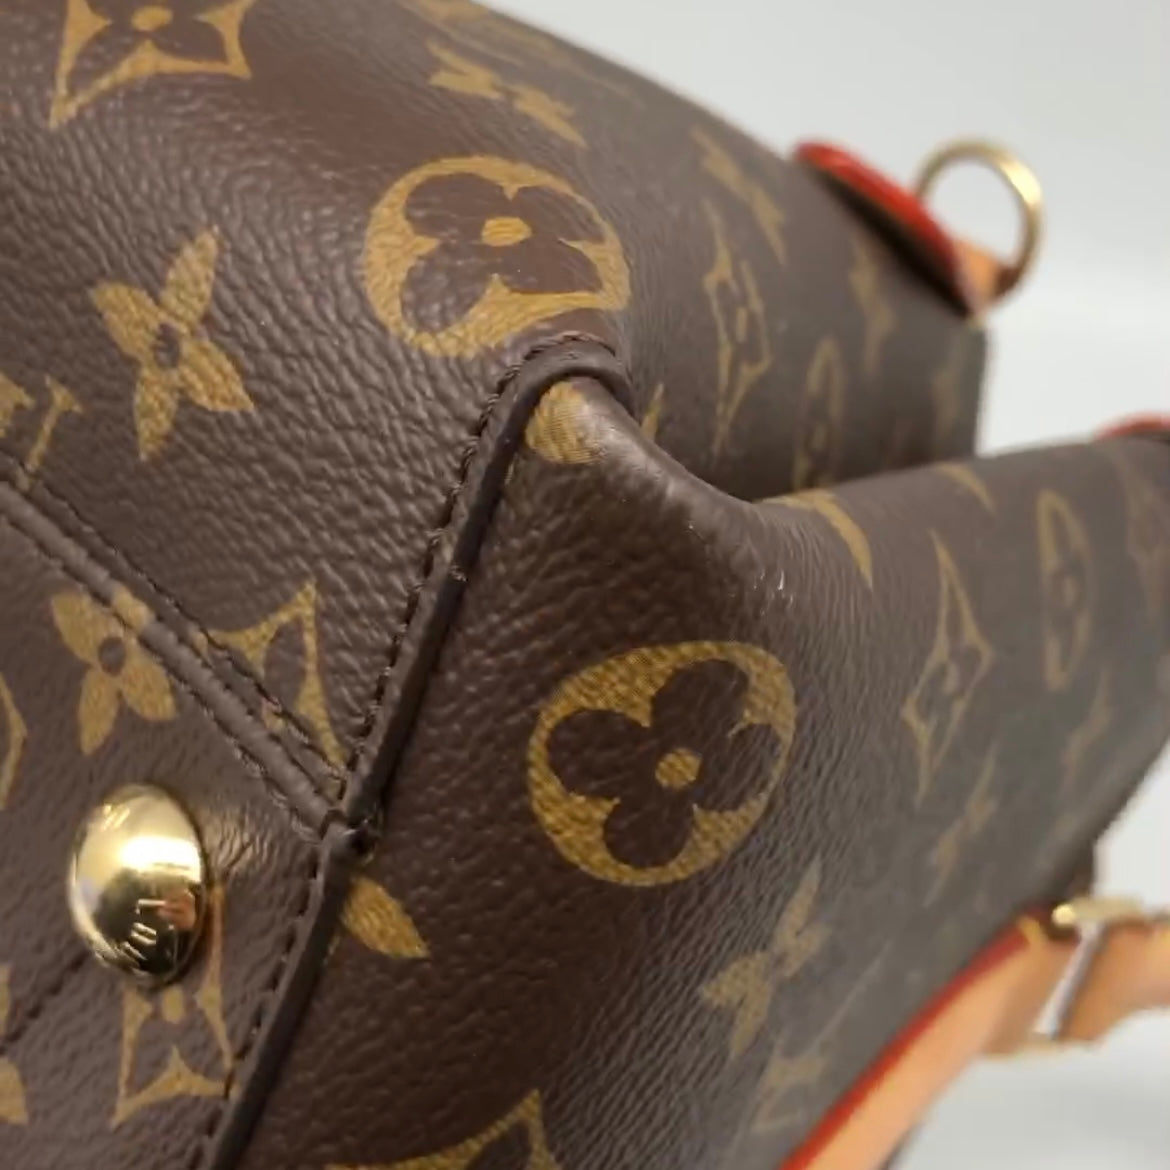 Louis Vuitton 2020 Monogram Soufflot BB - Brown Handle Bags